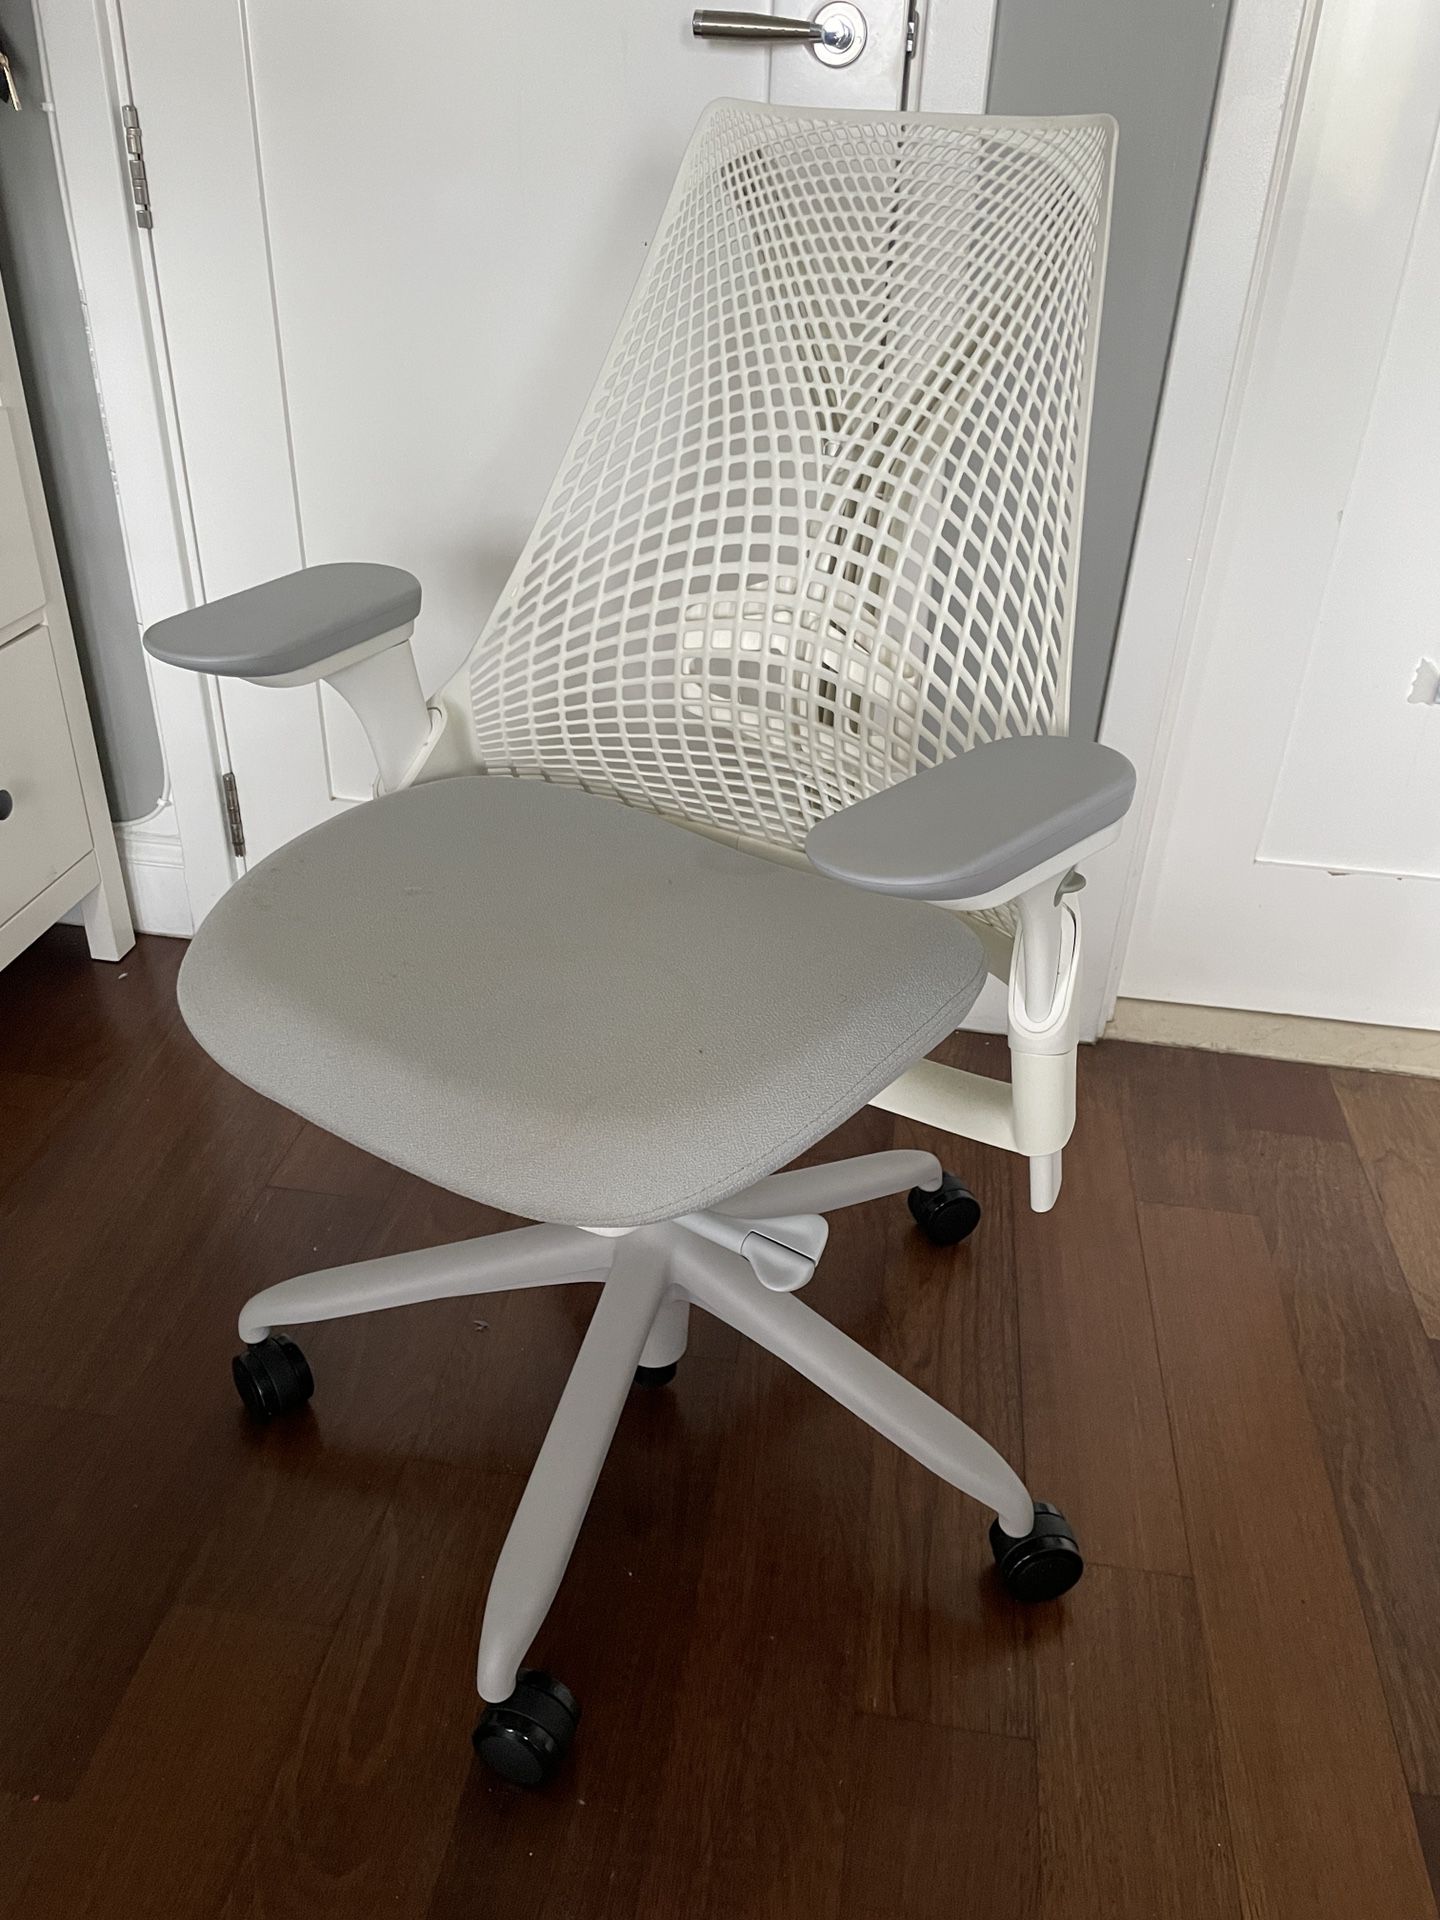 Fully Loaded Herman Miller Sayl Chair - $995 Value